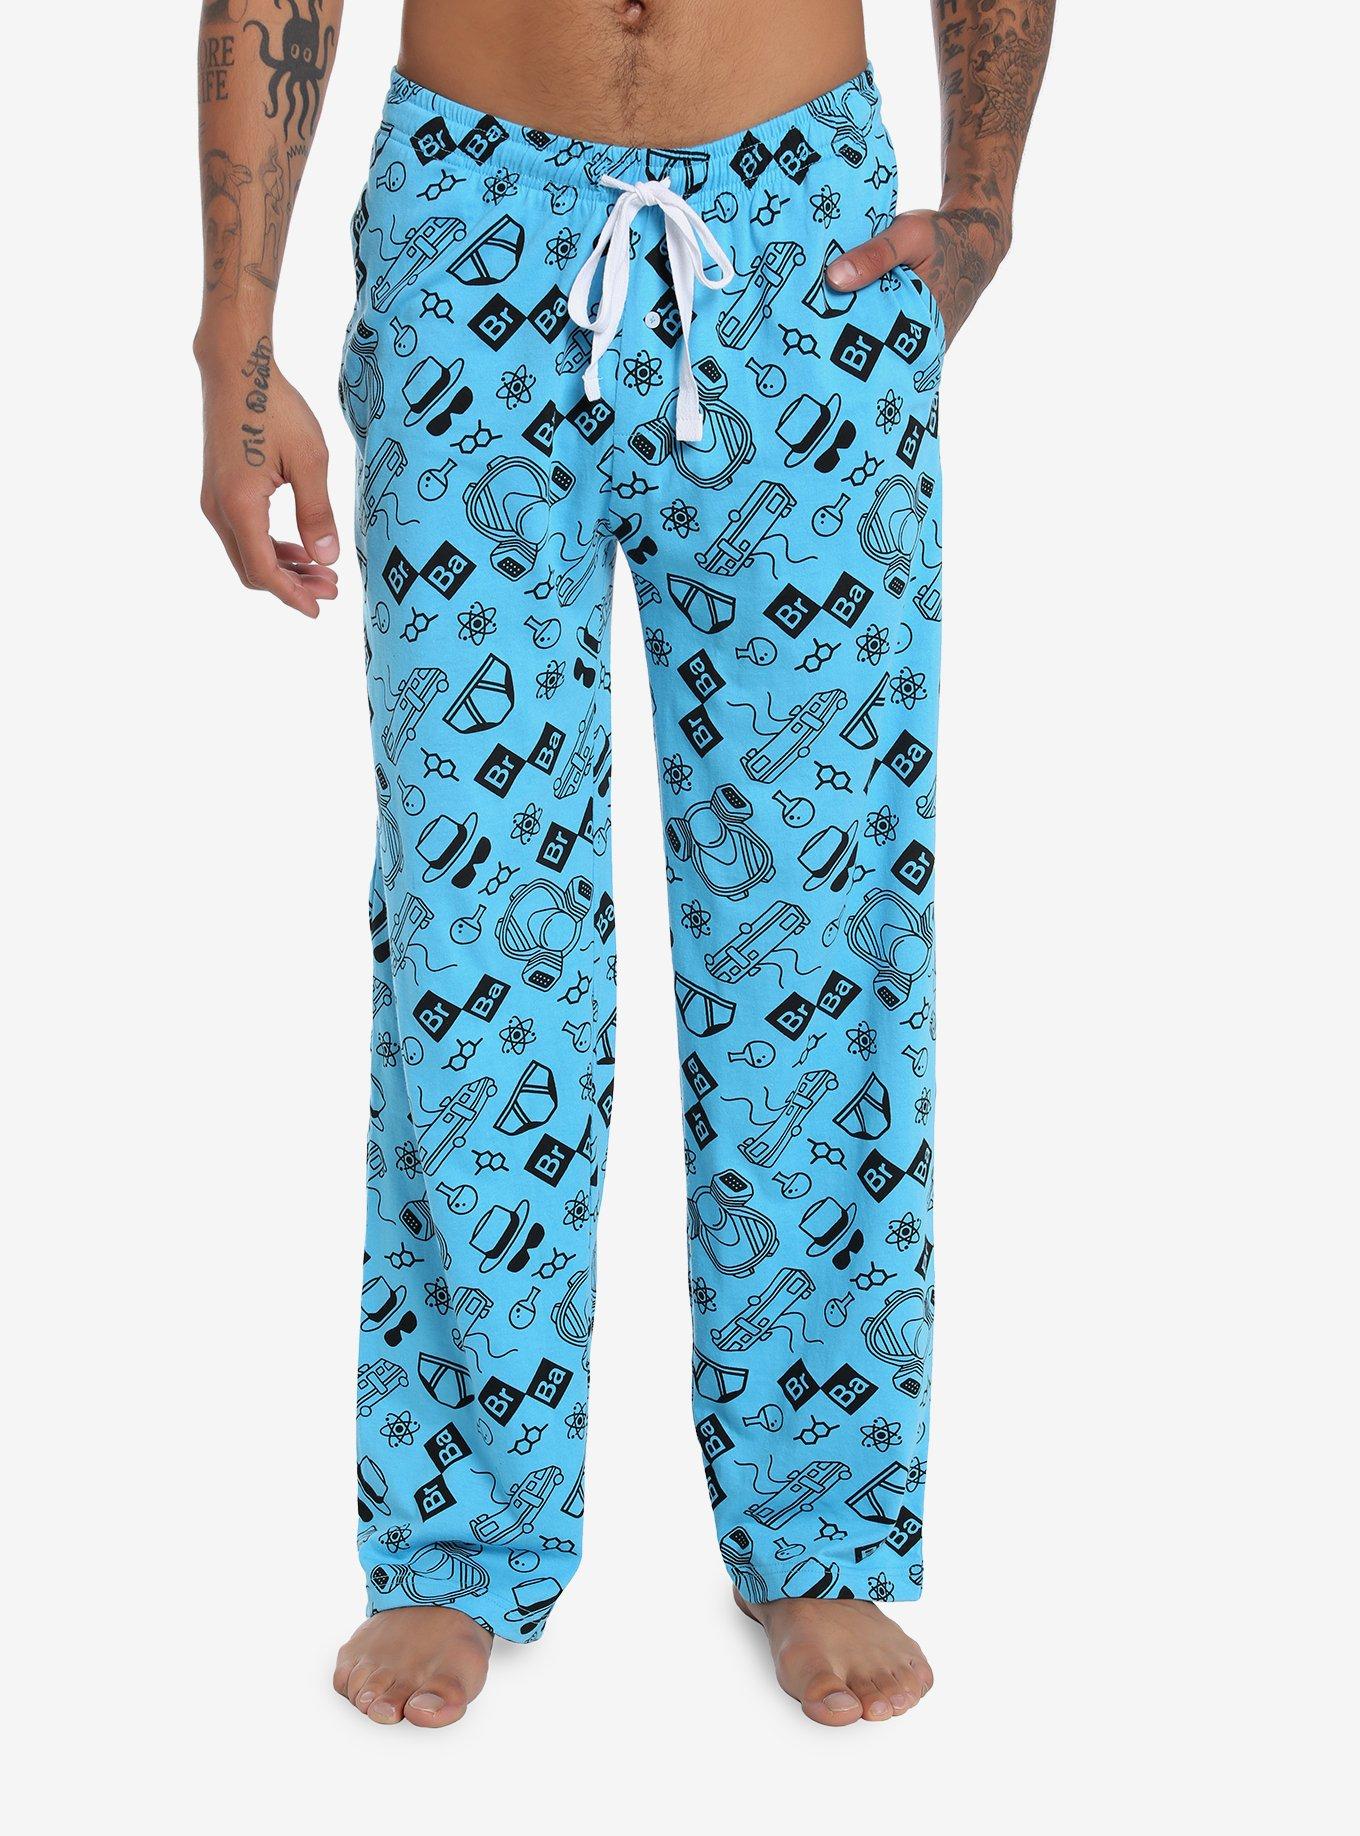 Children's Holiday Pajama PDF Pattern - Sew a Little Seam